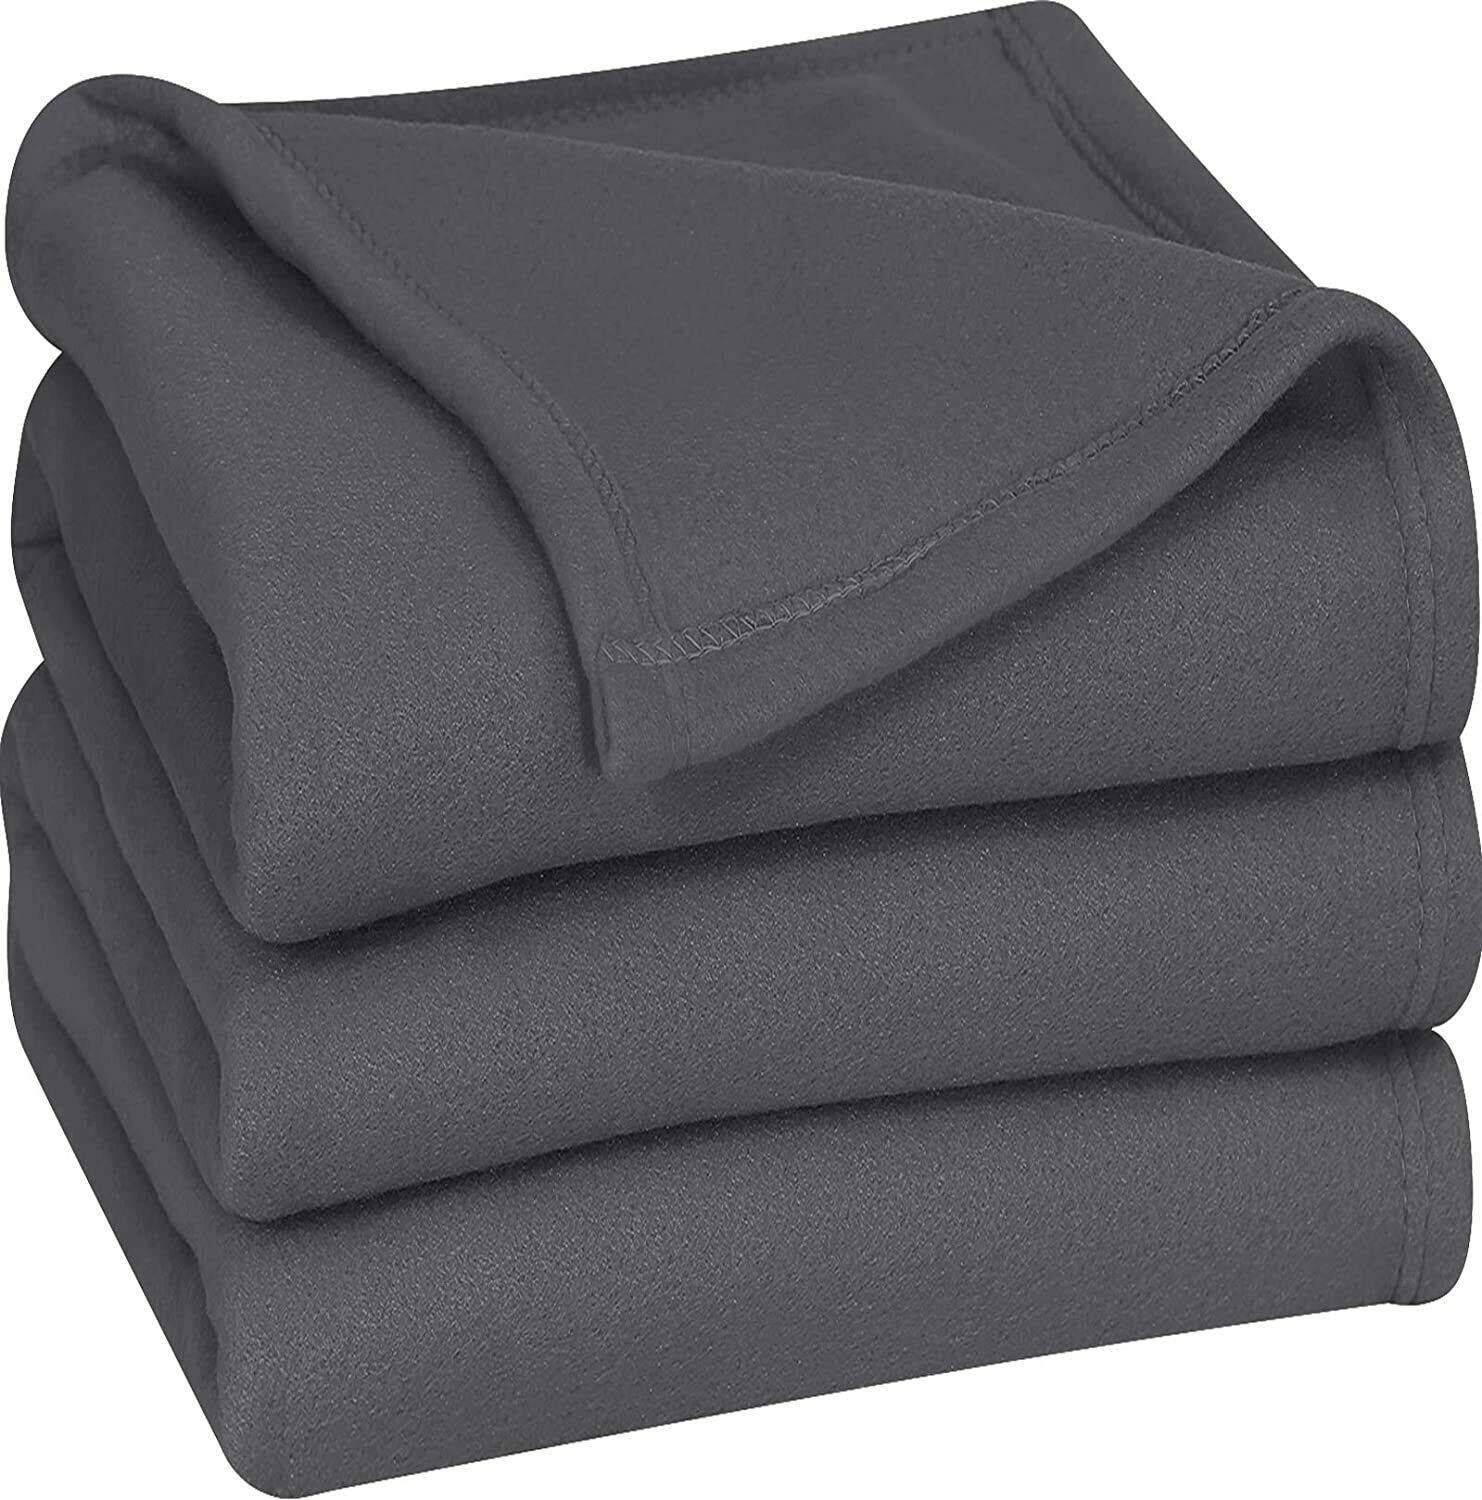 Thermal Bed Blanket Polar Fleece Soft Brush Fabric By Utopia Bedding